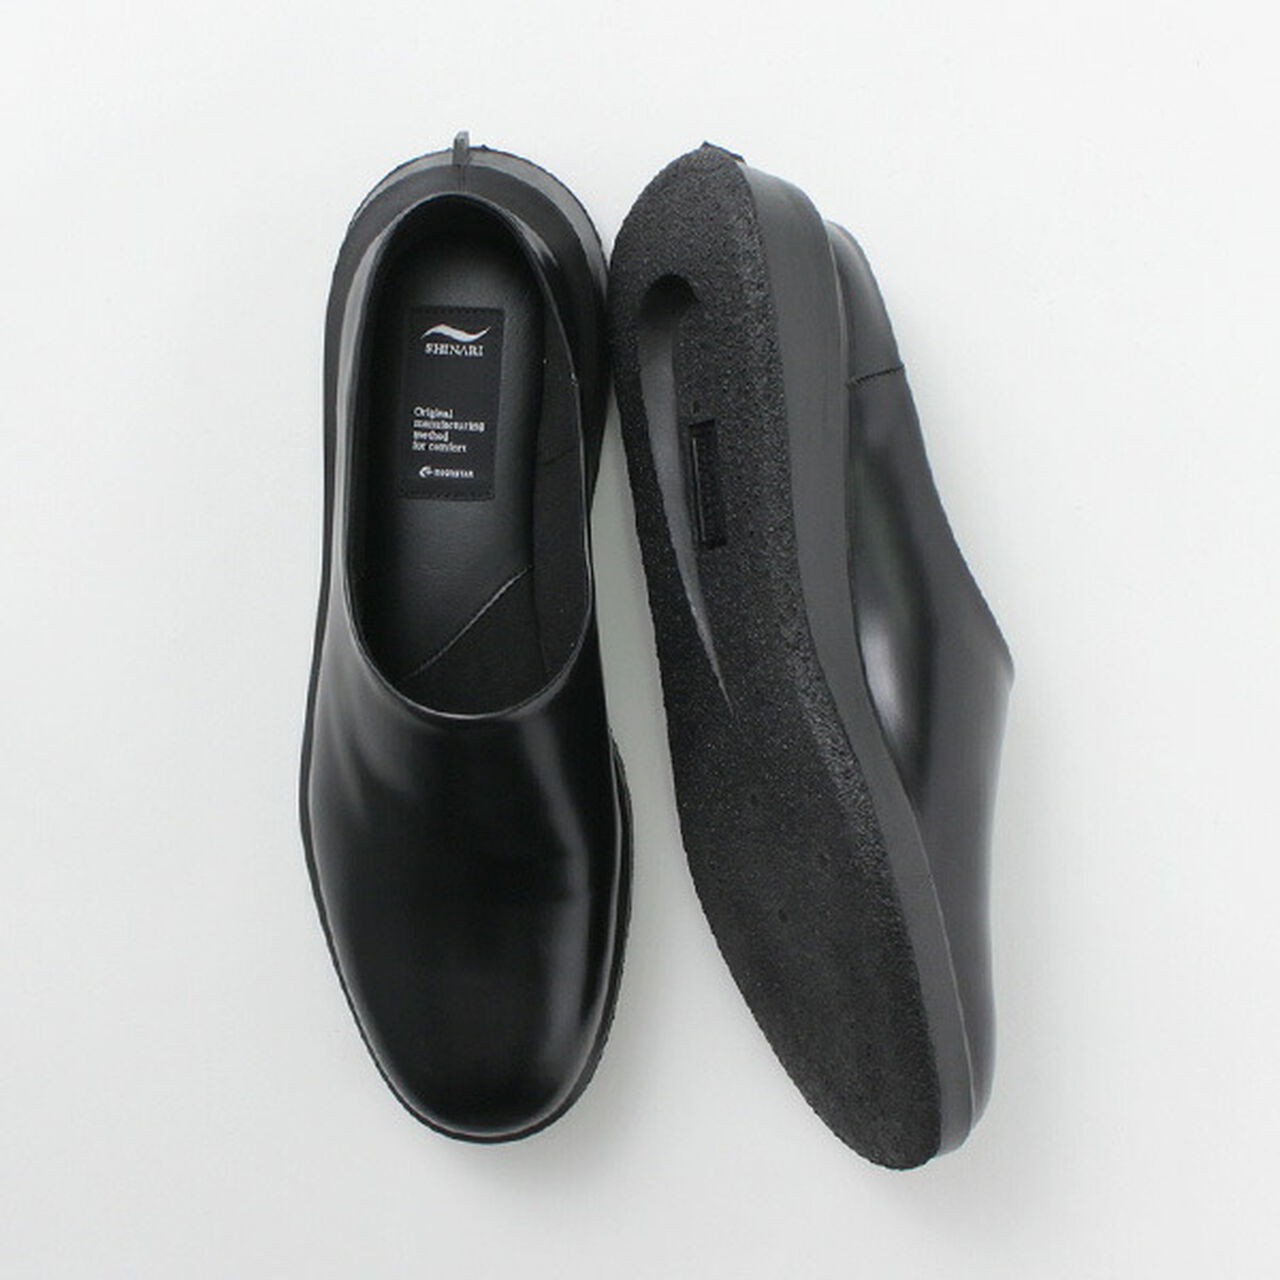 KI Leather Shoes,Black, large image number 0